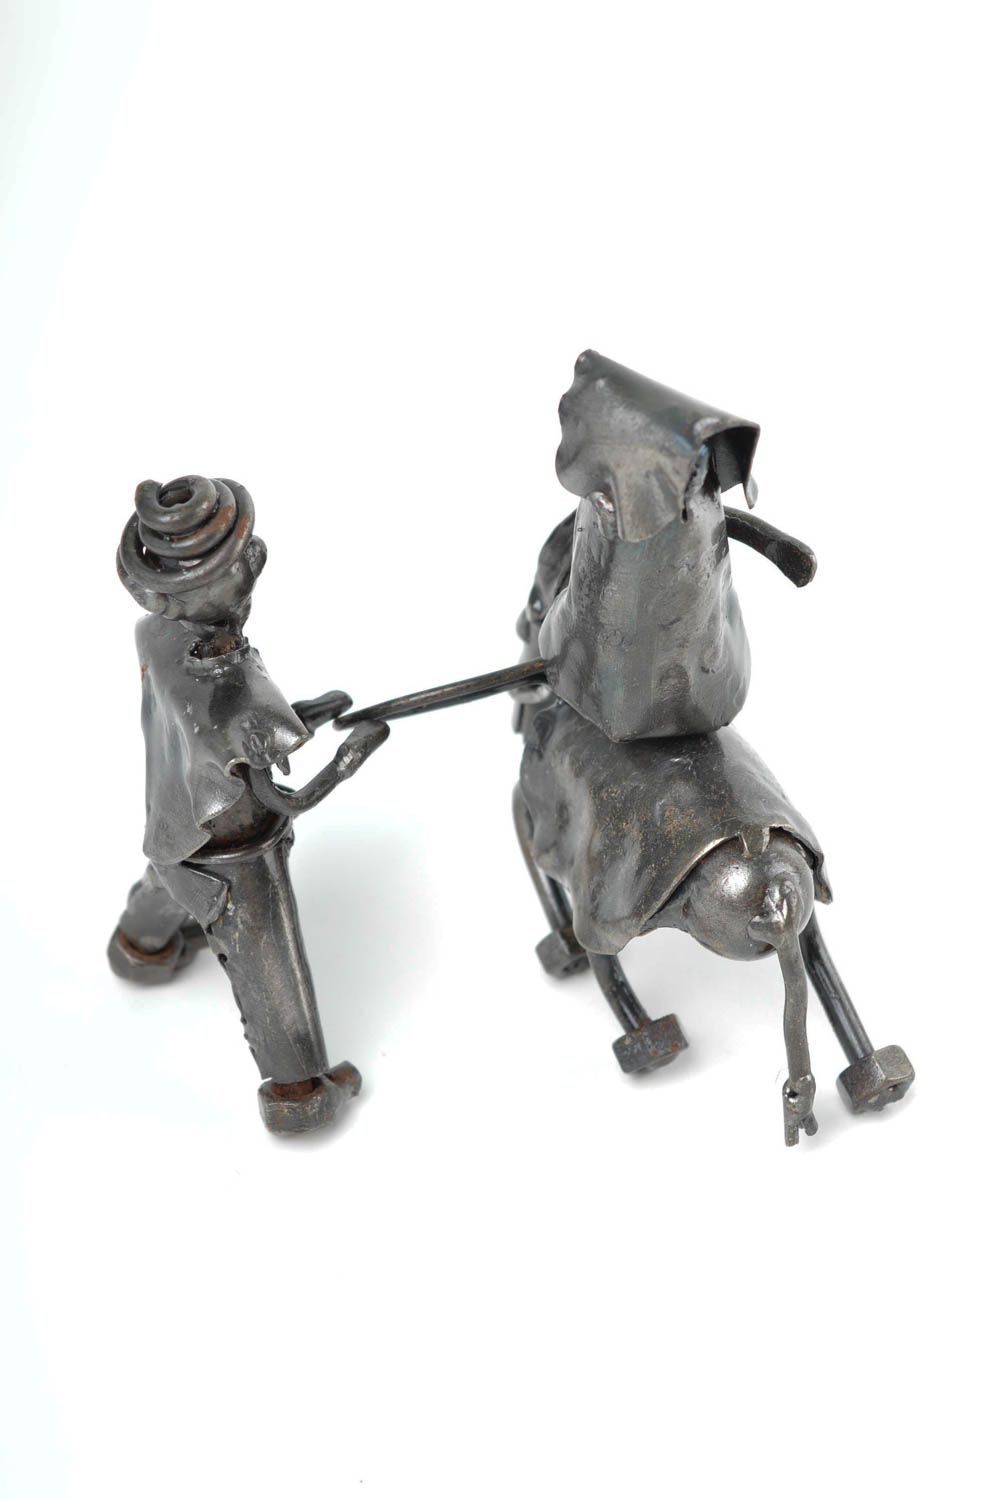 Unusual handmade figurine metal figurines metal craft decorative use only photo 5